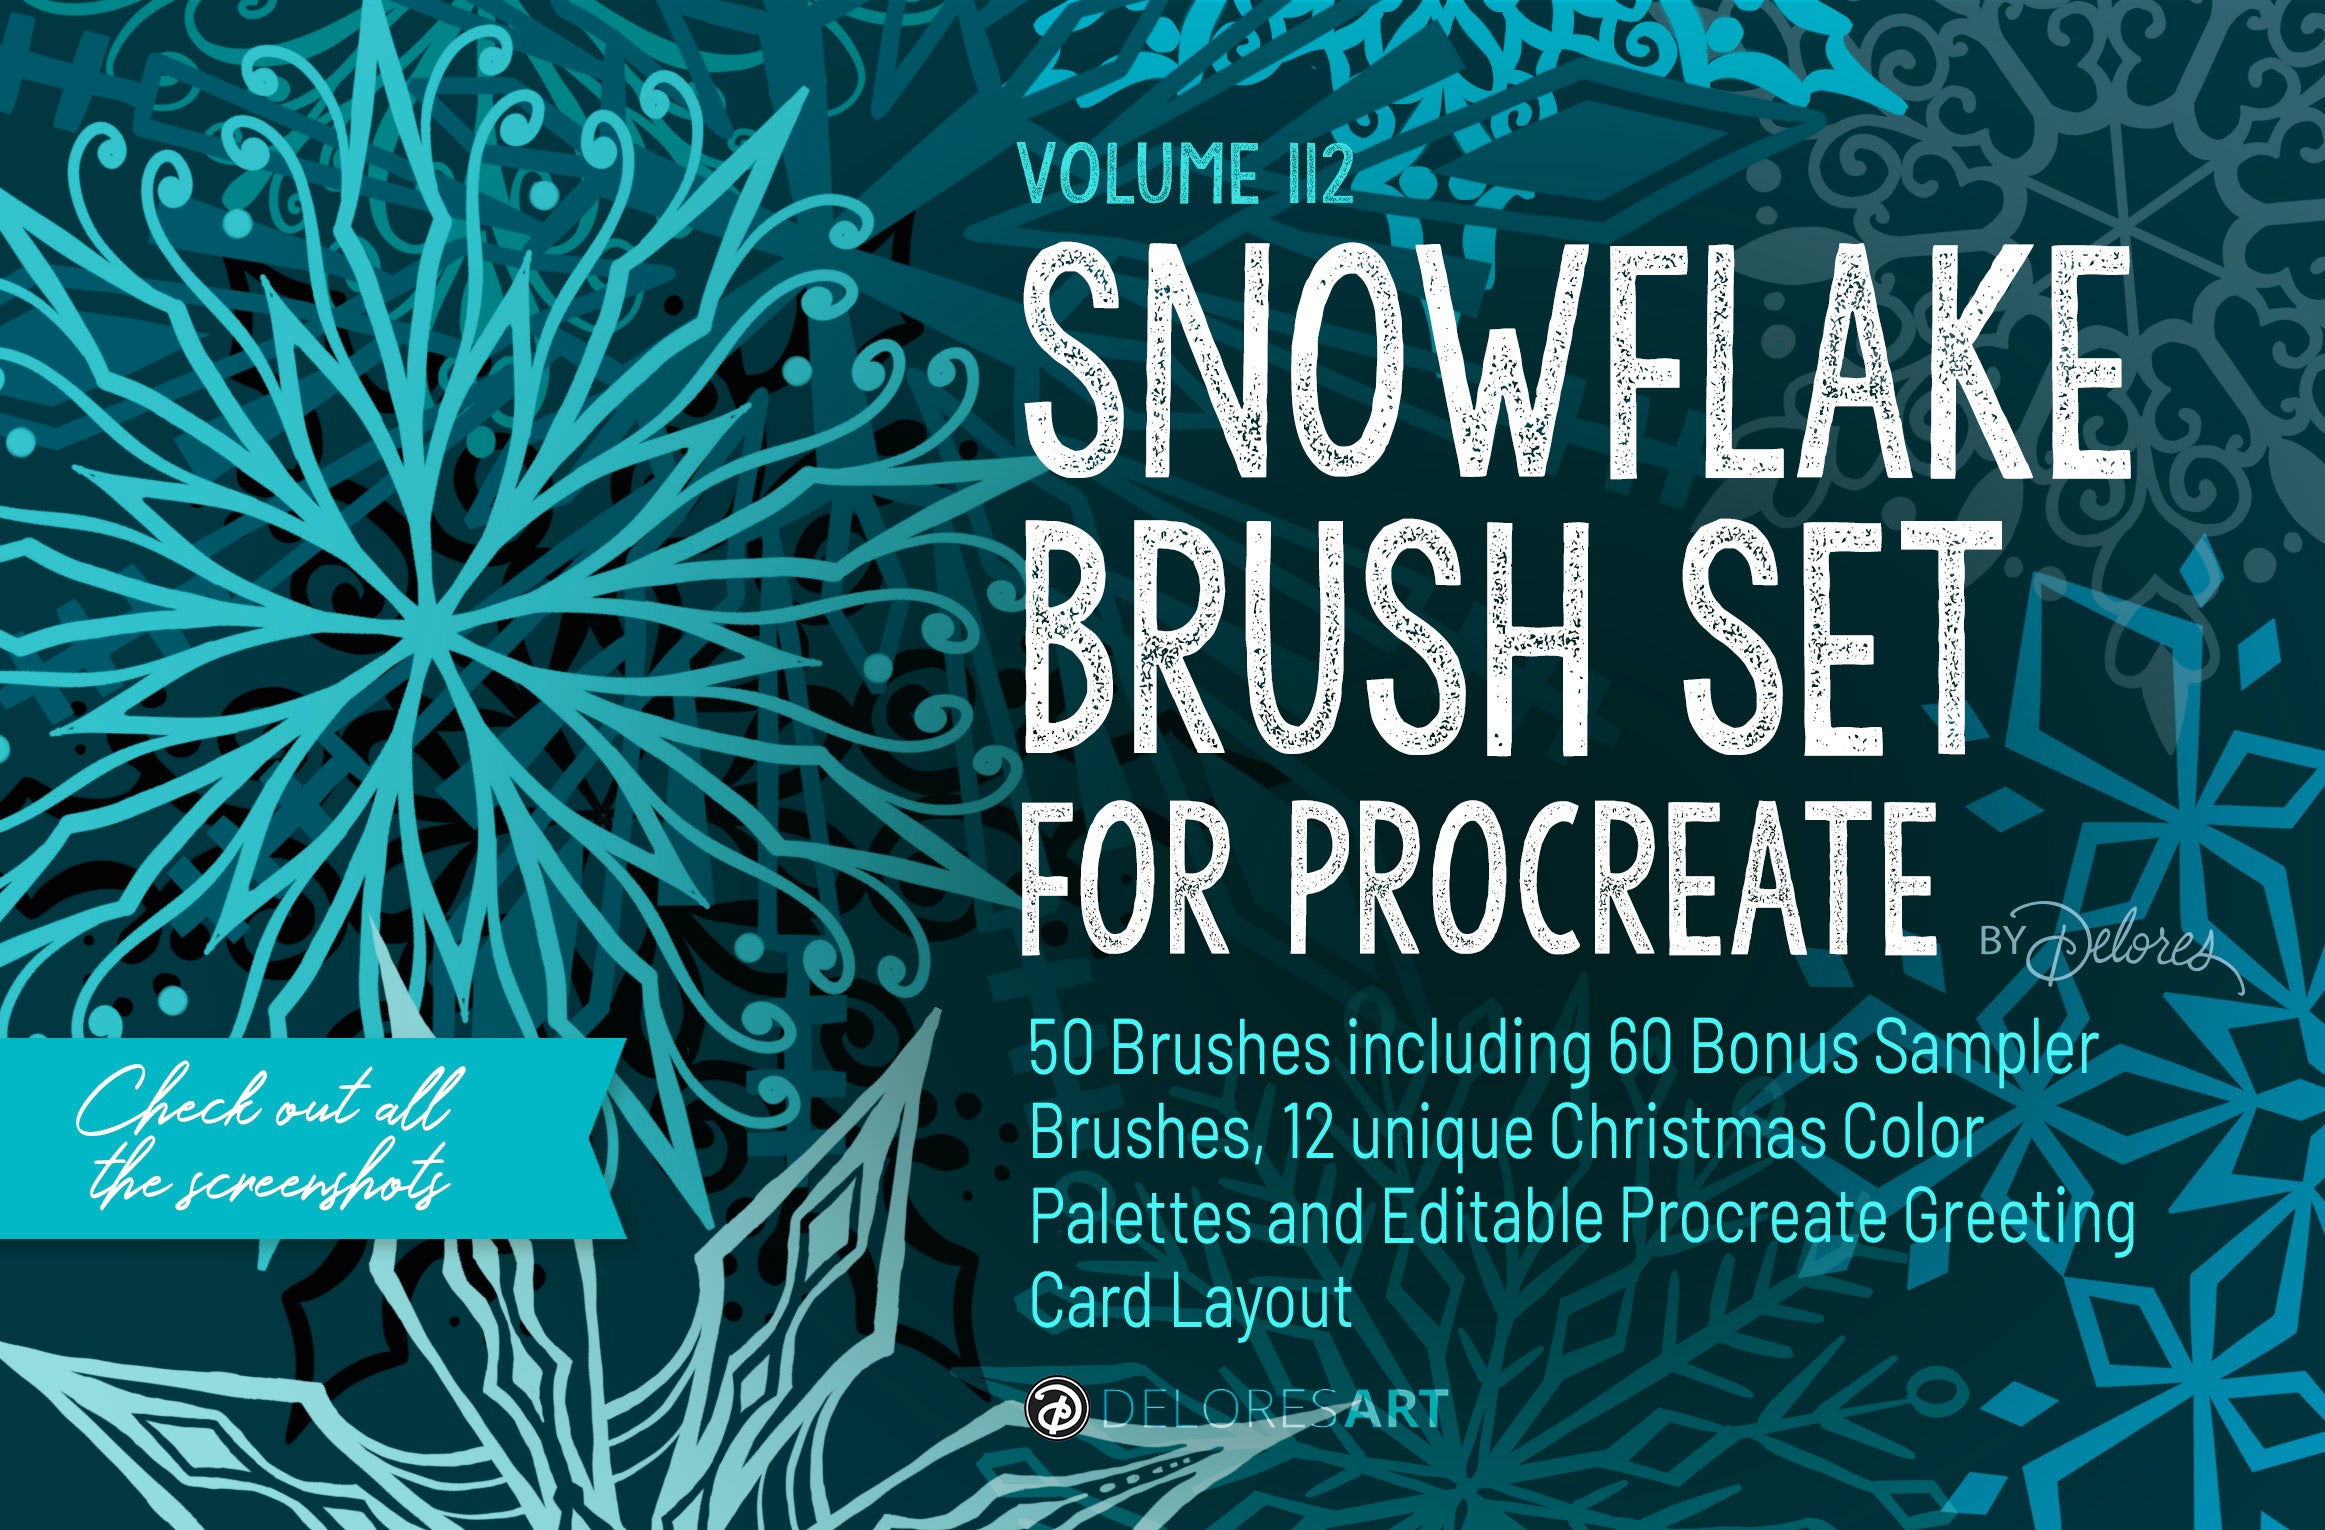 Volume 112 Snowflake Stamp and Scatter Brush Kit